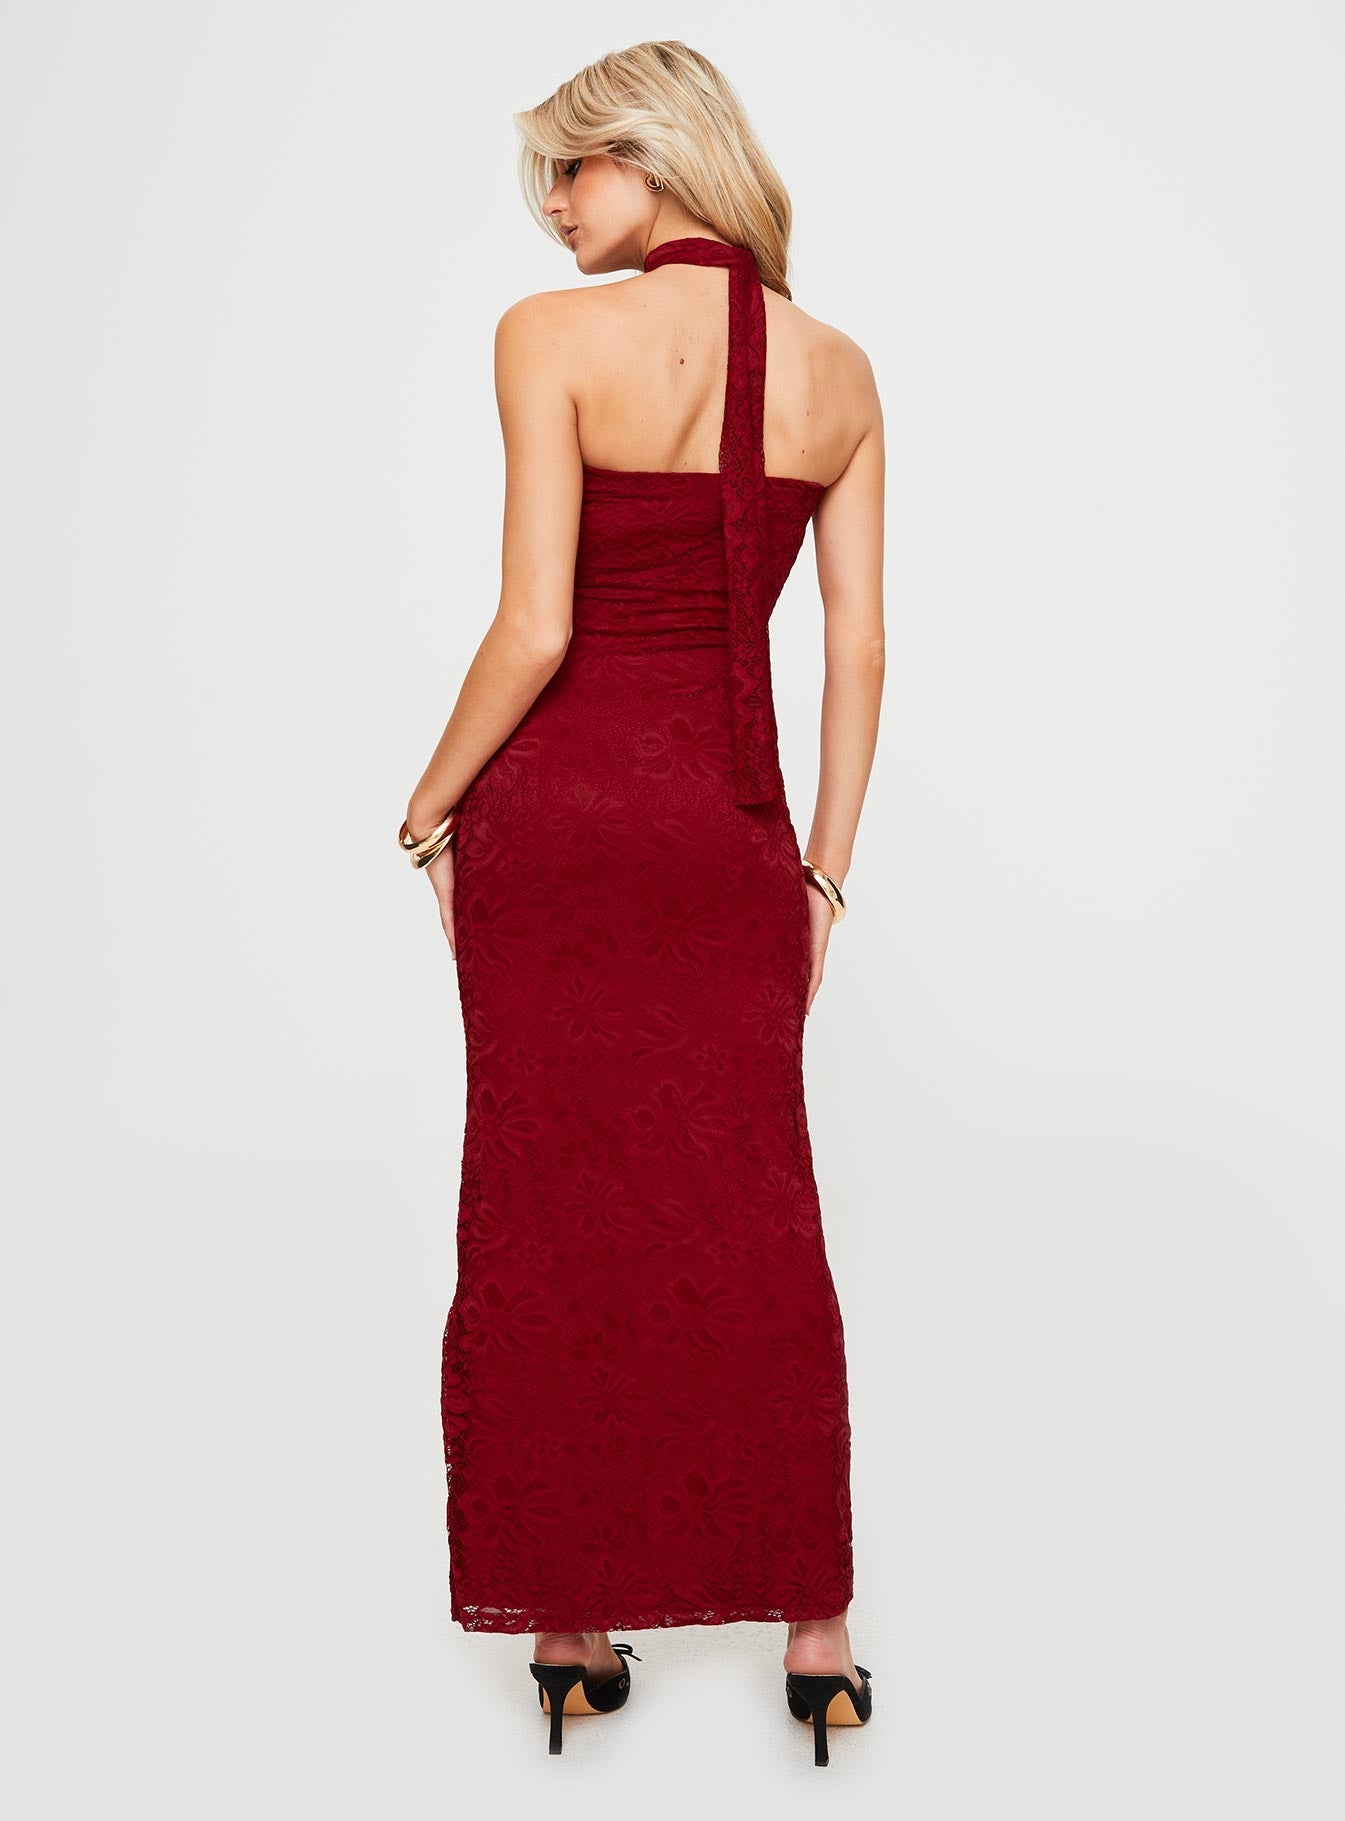 Shop Formal Dress - Melantha Strapless Maxi Dress Red featured image